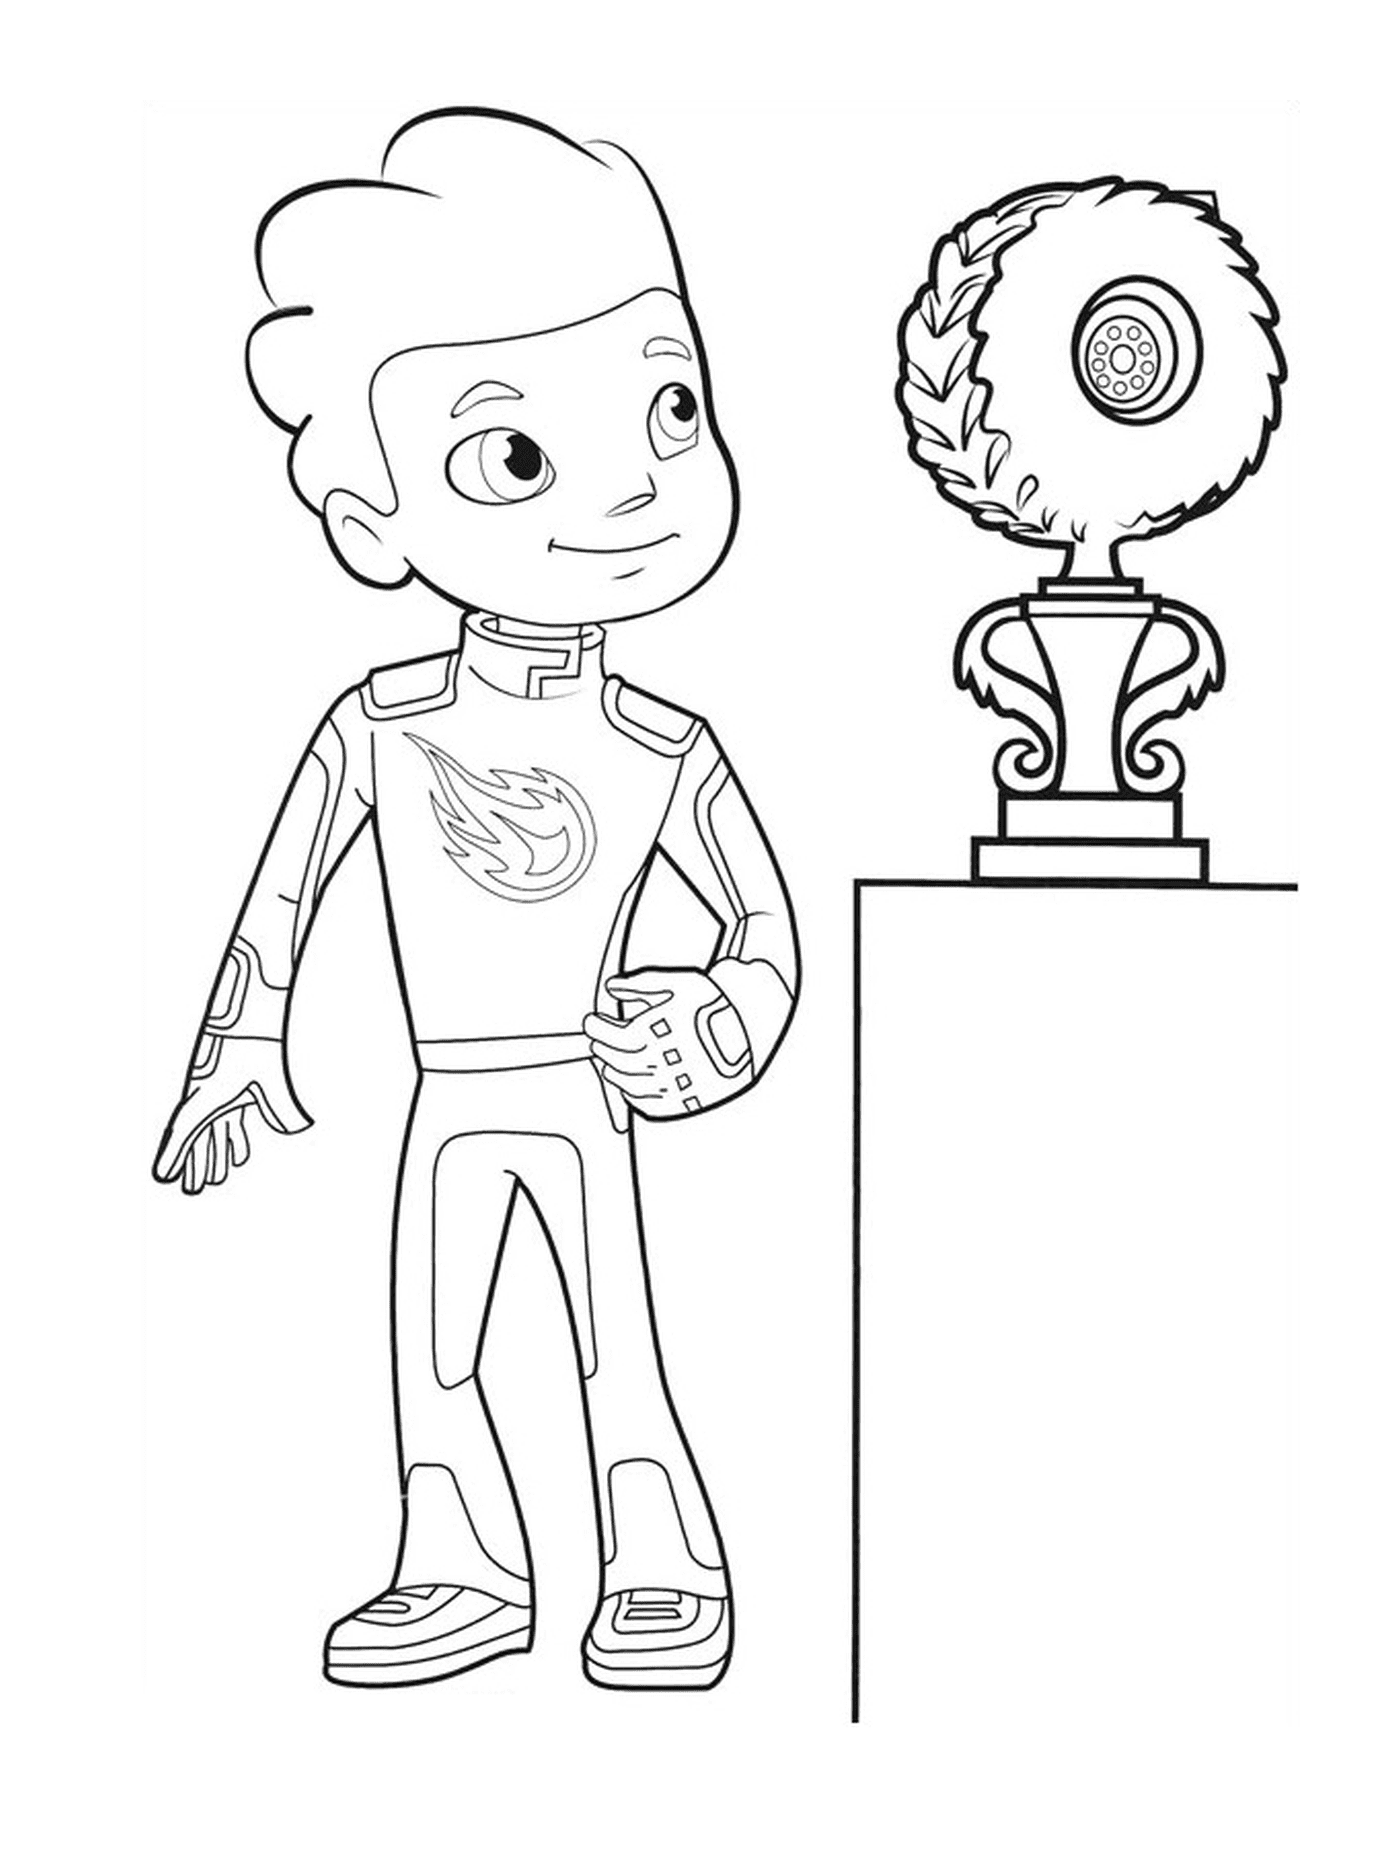  A boy standing next to a trophy 